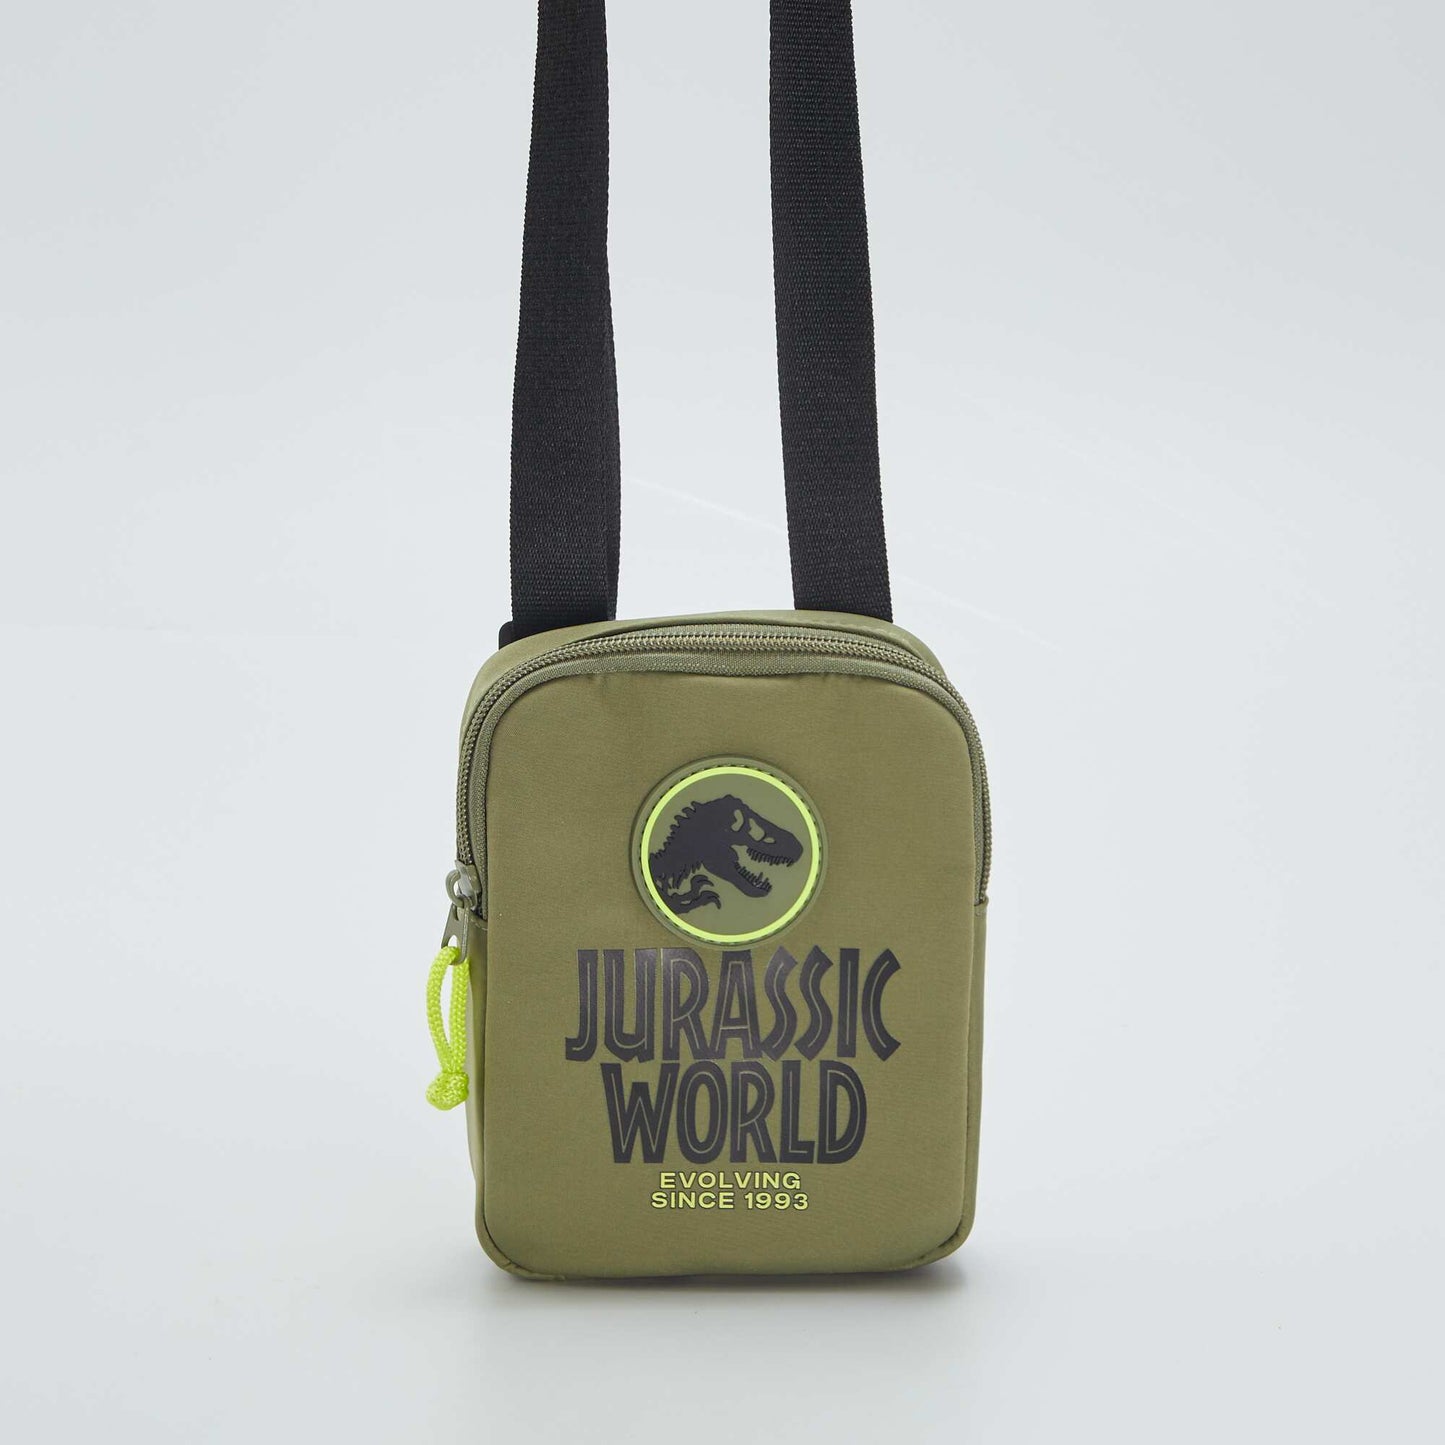 Jurassic World nylon bag green